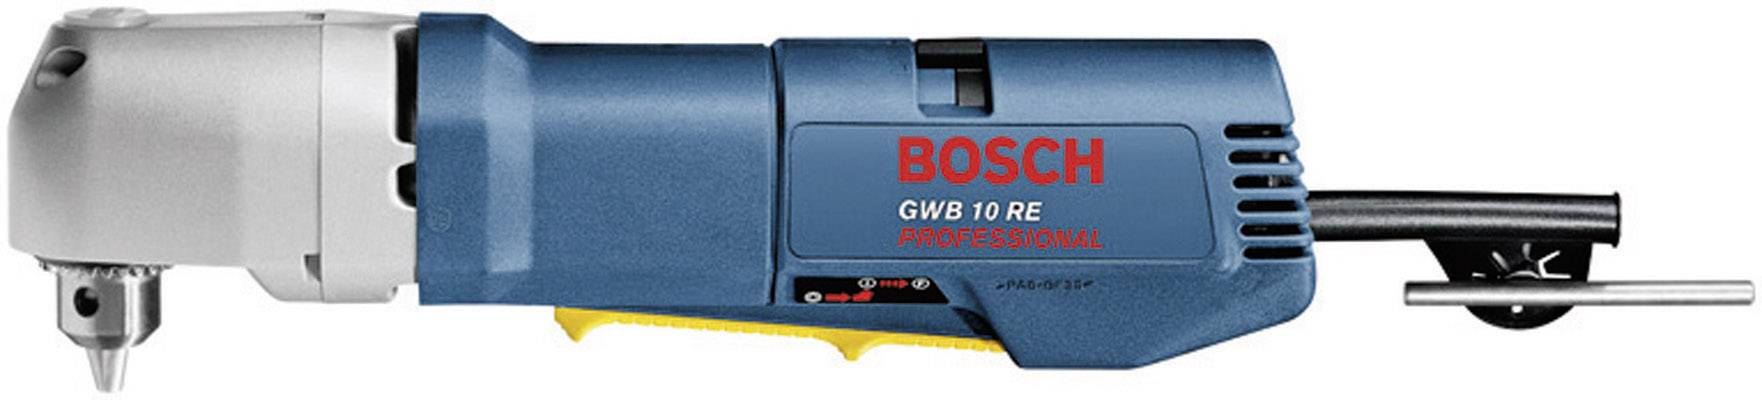 BOSCH GWB 10 RE Professional - Winkelbohrer/-schrauber - 400 W - Bohrfutter 10 mm - 5.5 N·m (0601132